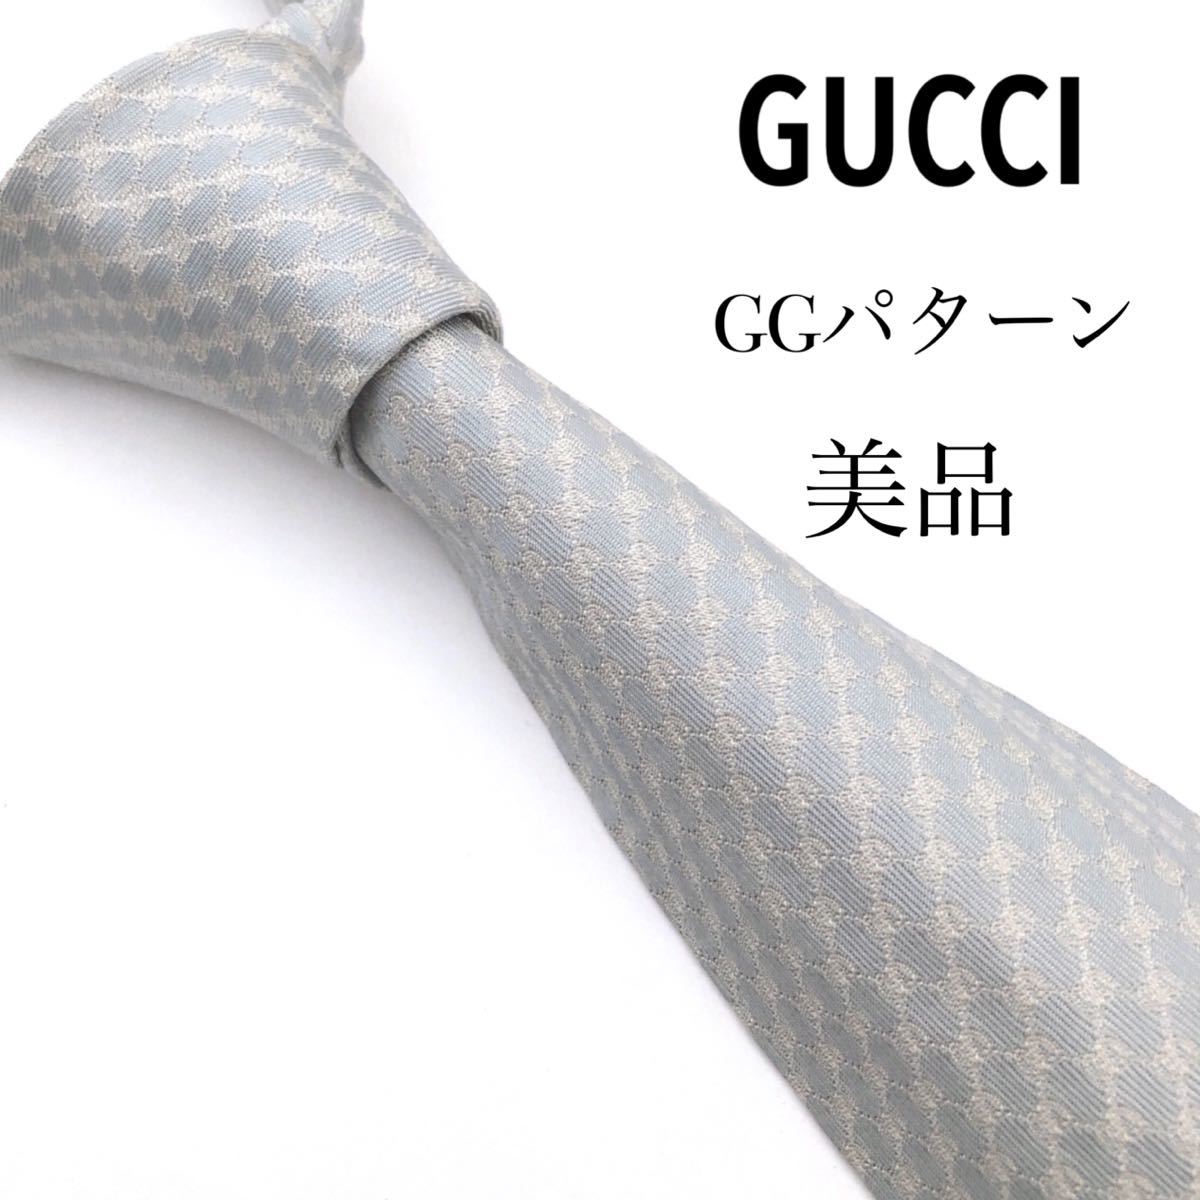 GUCCI 美品 ネクタイ 最高級シルク GGパターン GG柄 水色 白 メンズ